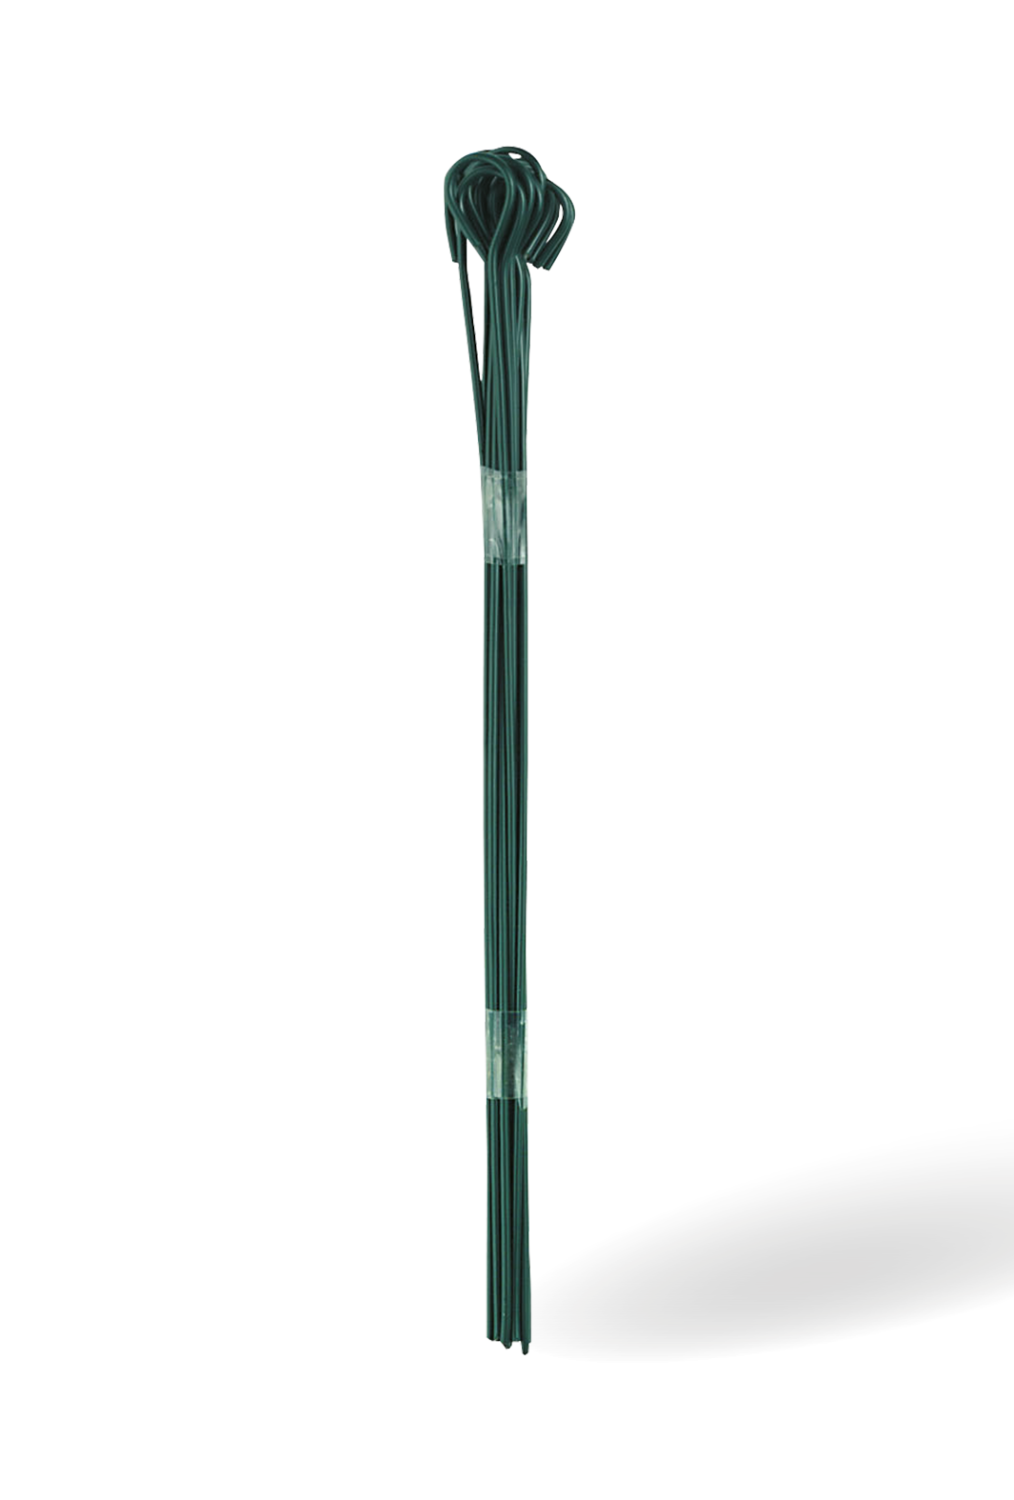 Anthurienringstäbe, 30 cm (2000 Stk.) L: 0.1 B: 0.1 H: 30